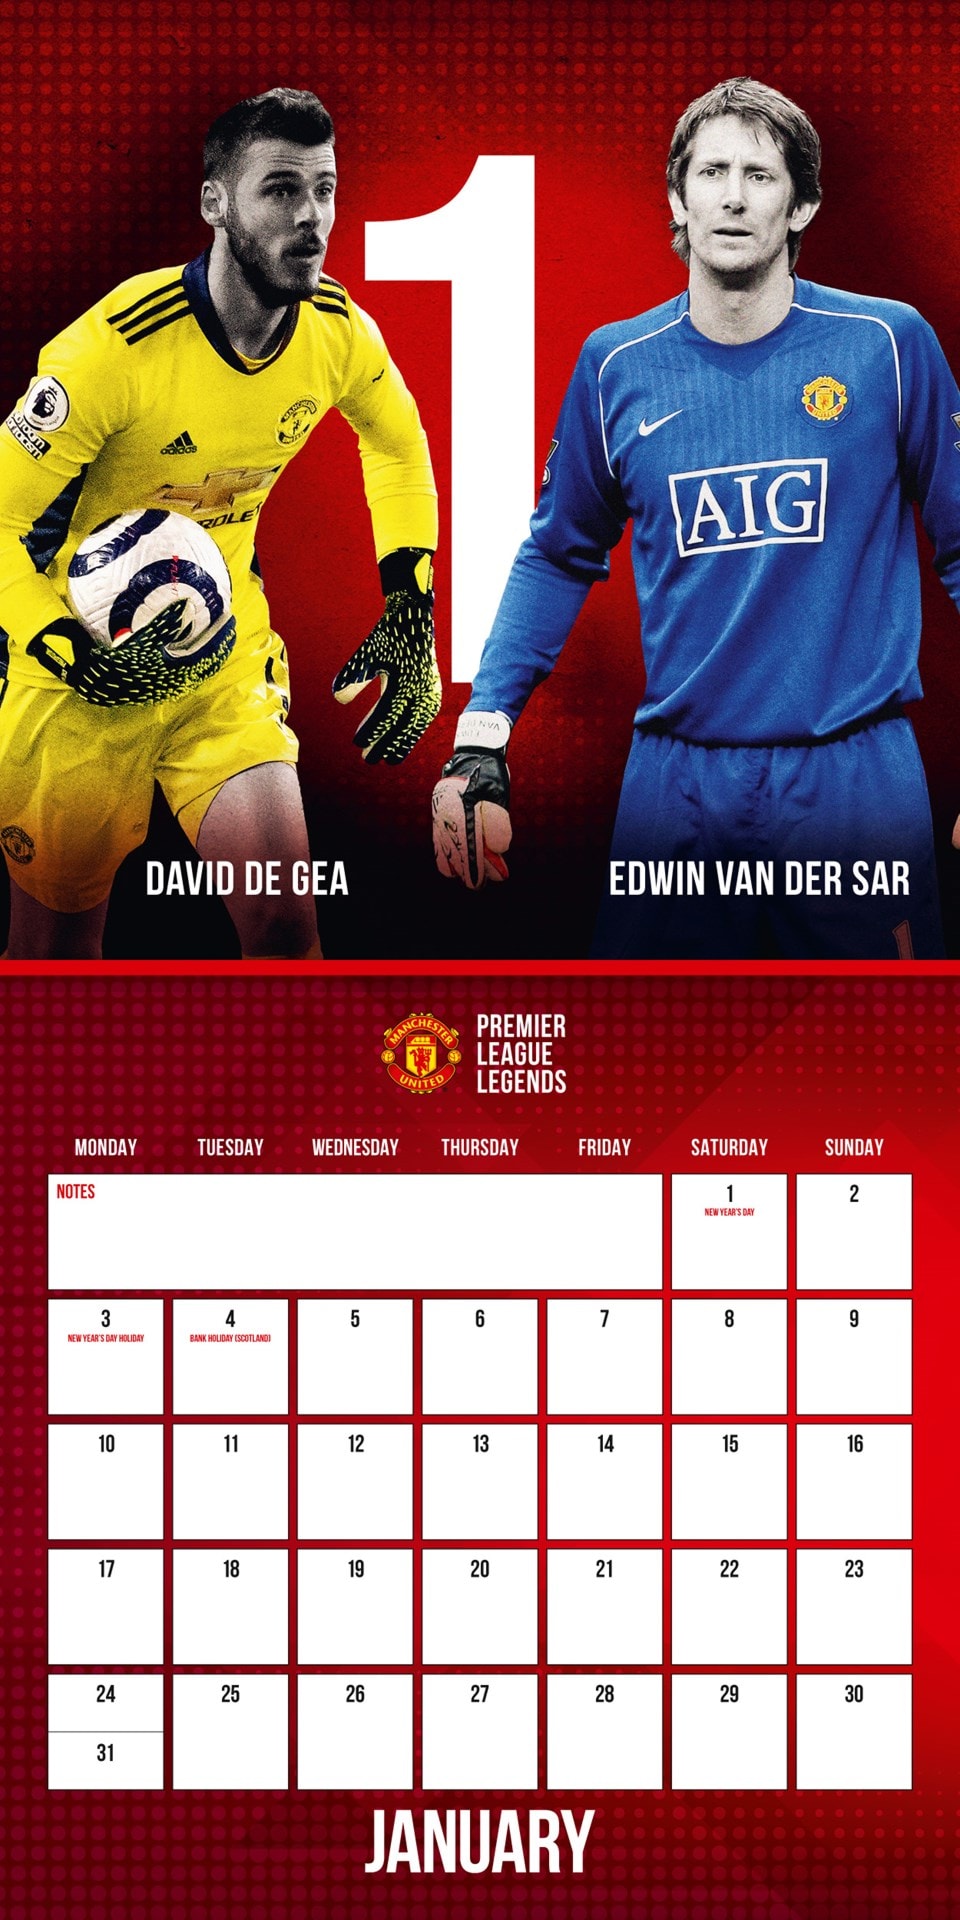 Manchester United FC 2022 Calendar & Diary Gift Box | Calendars | Free